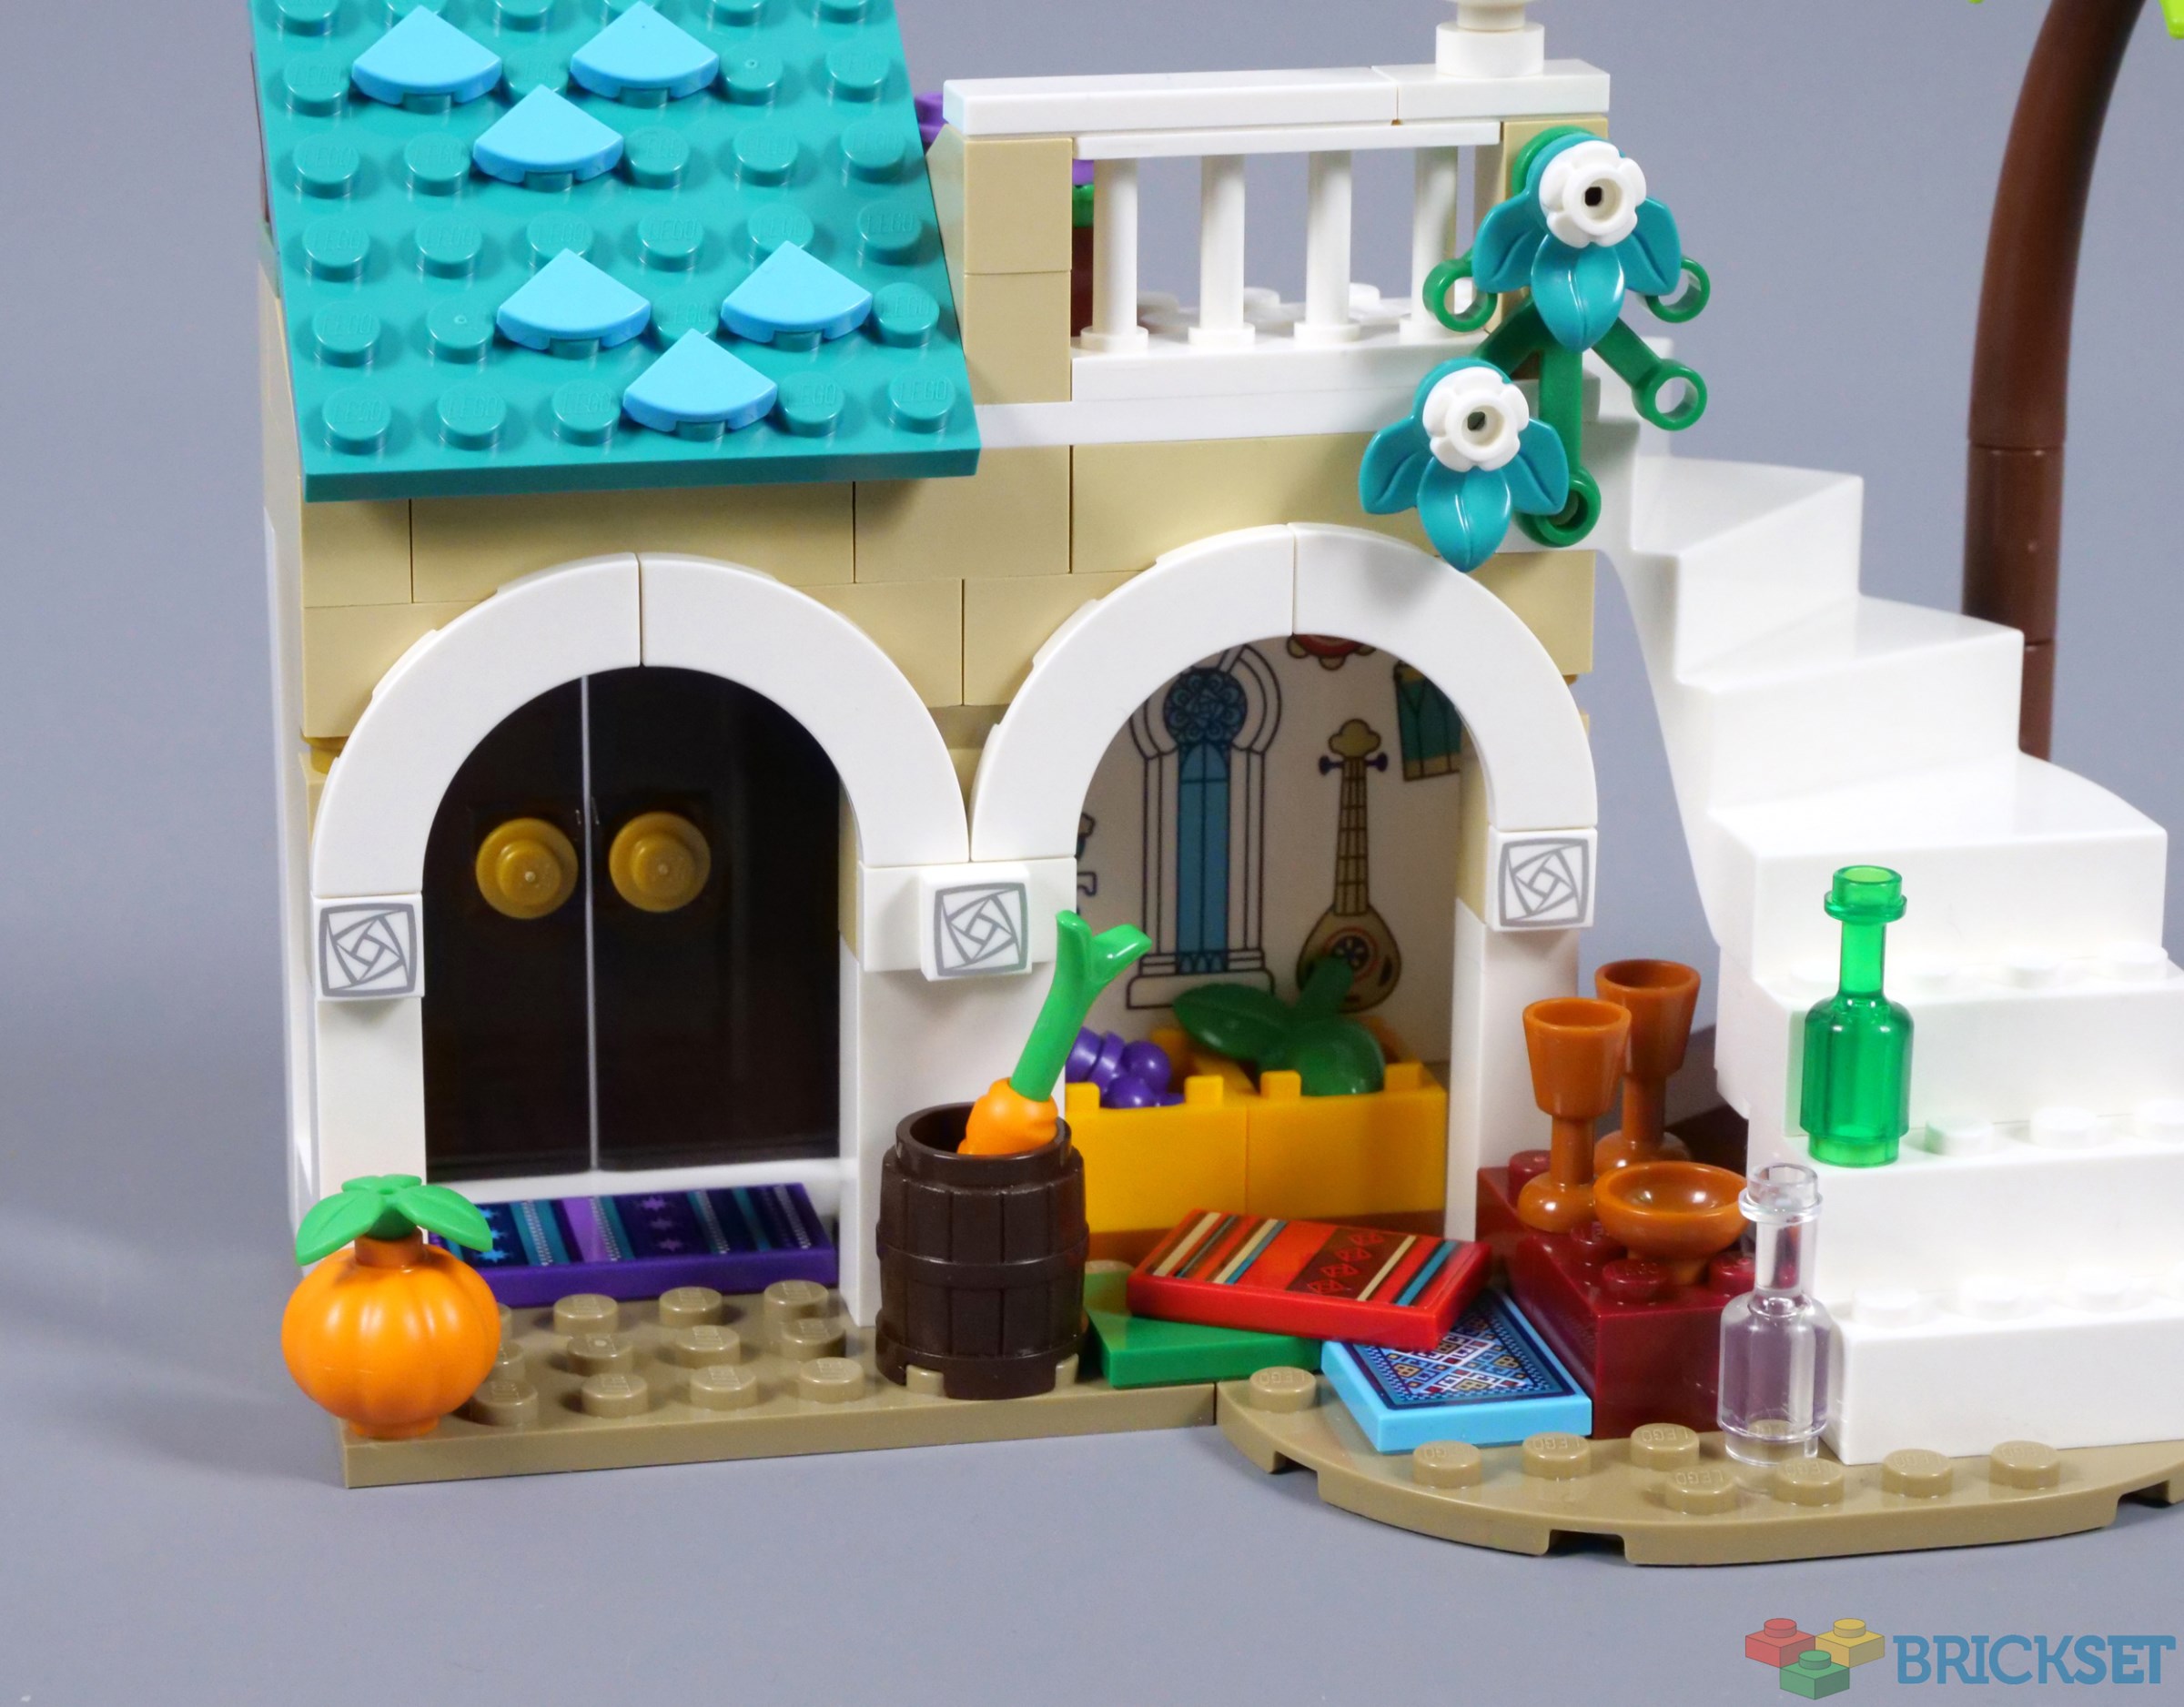 LEGO Disney Asha in the City of Rosas 43223 Building Toy Set (154 Pieces)